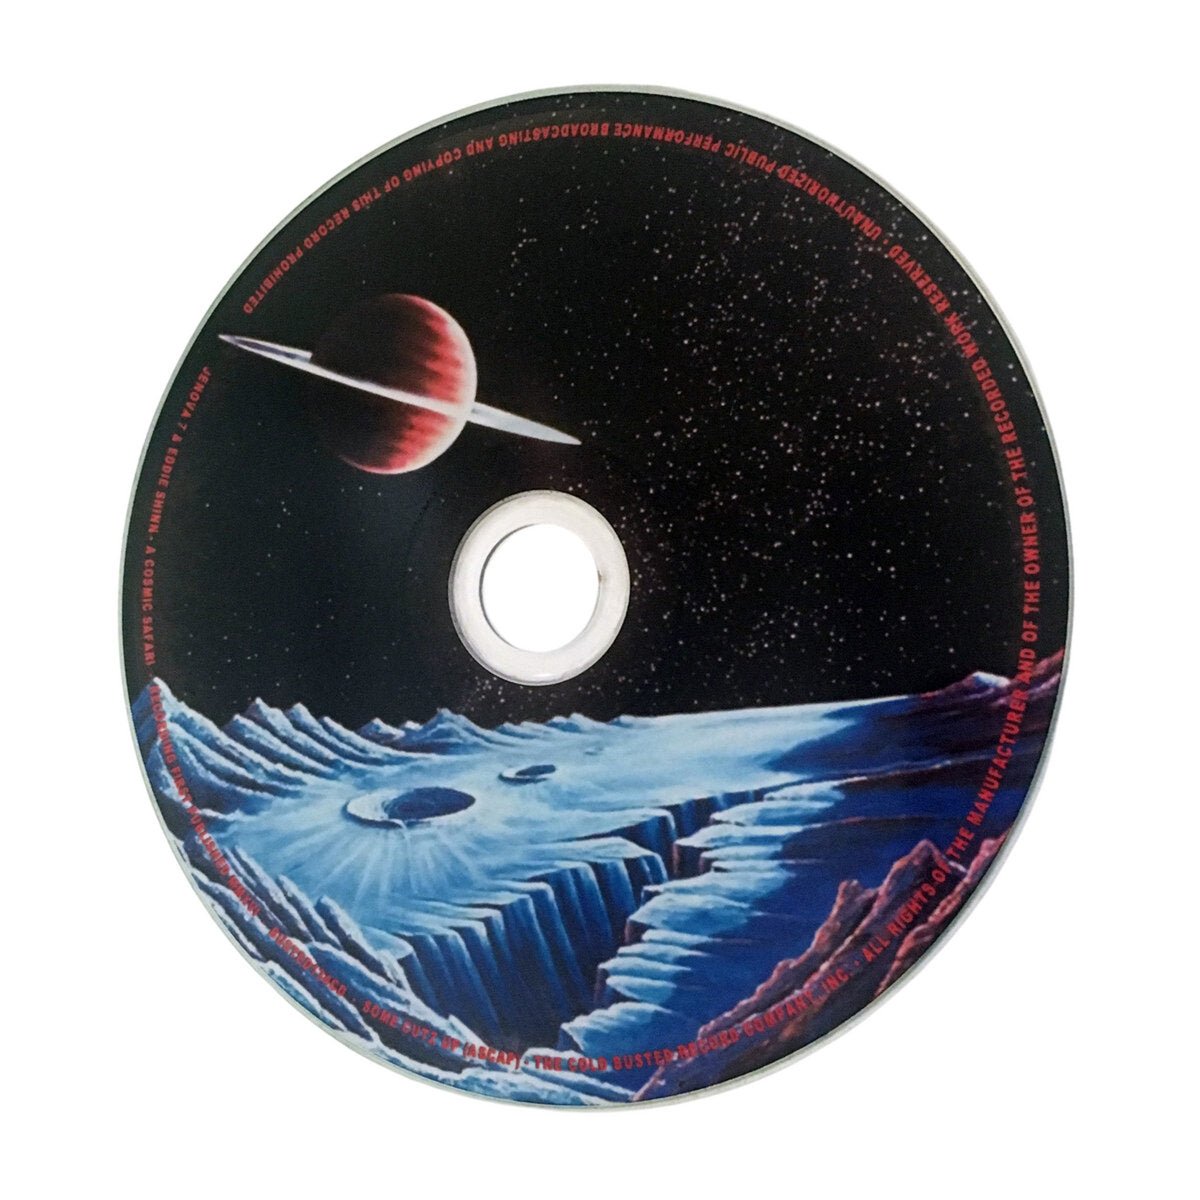 Jenova 7 & Eddie Shinn - A Cosmic Safari - Limited Edition Compact Disc - Cold Busted